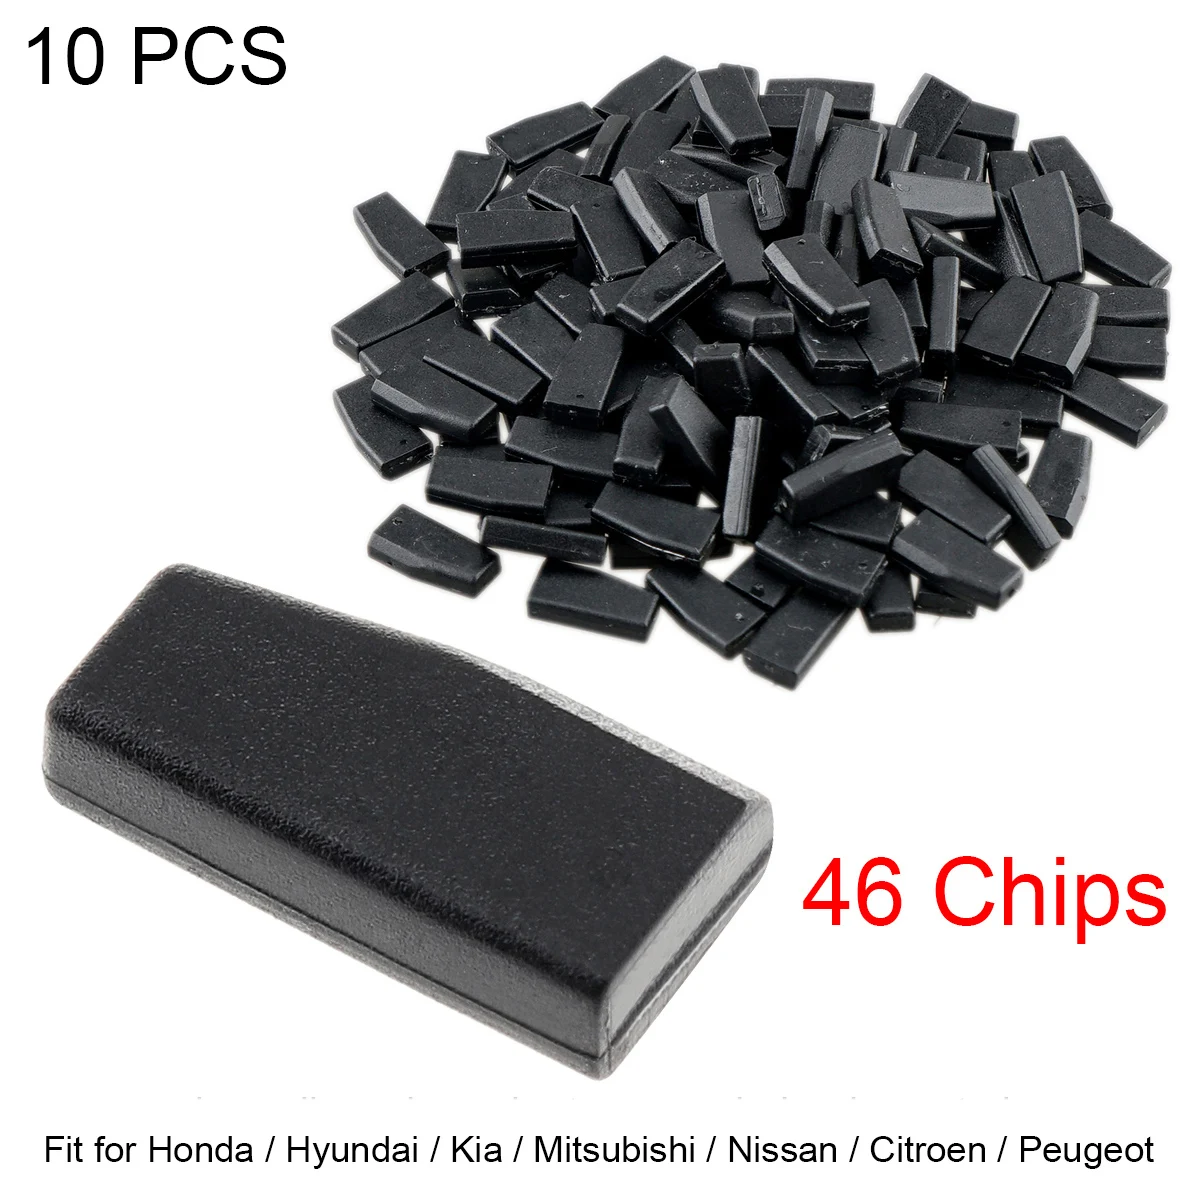 10pcs Blank ID46 Chip PCF7936 Carbon Car Key Transponder Chip for Nis san Hon da Hyun dai Ki a Mitsu bishi Ci troen Peu geot